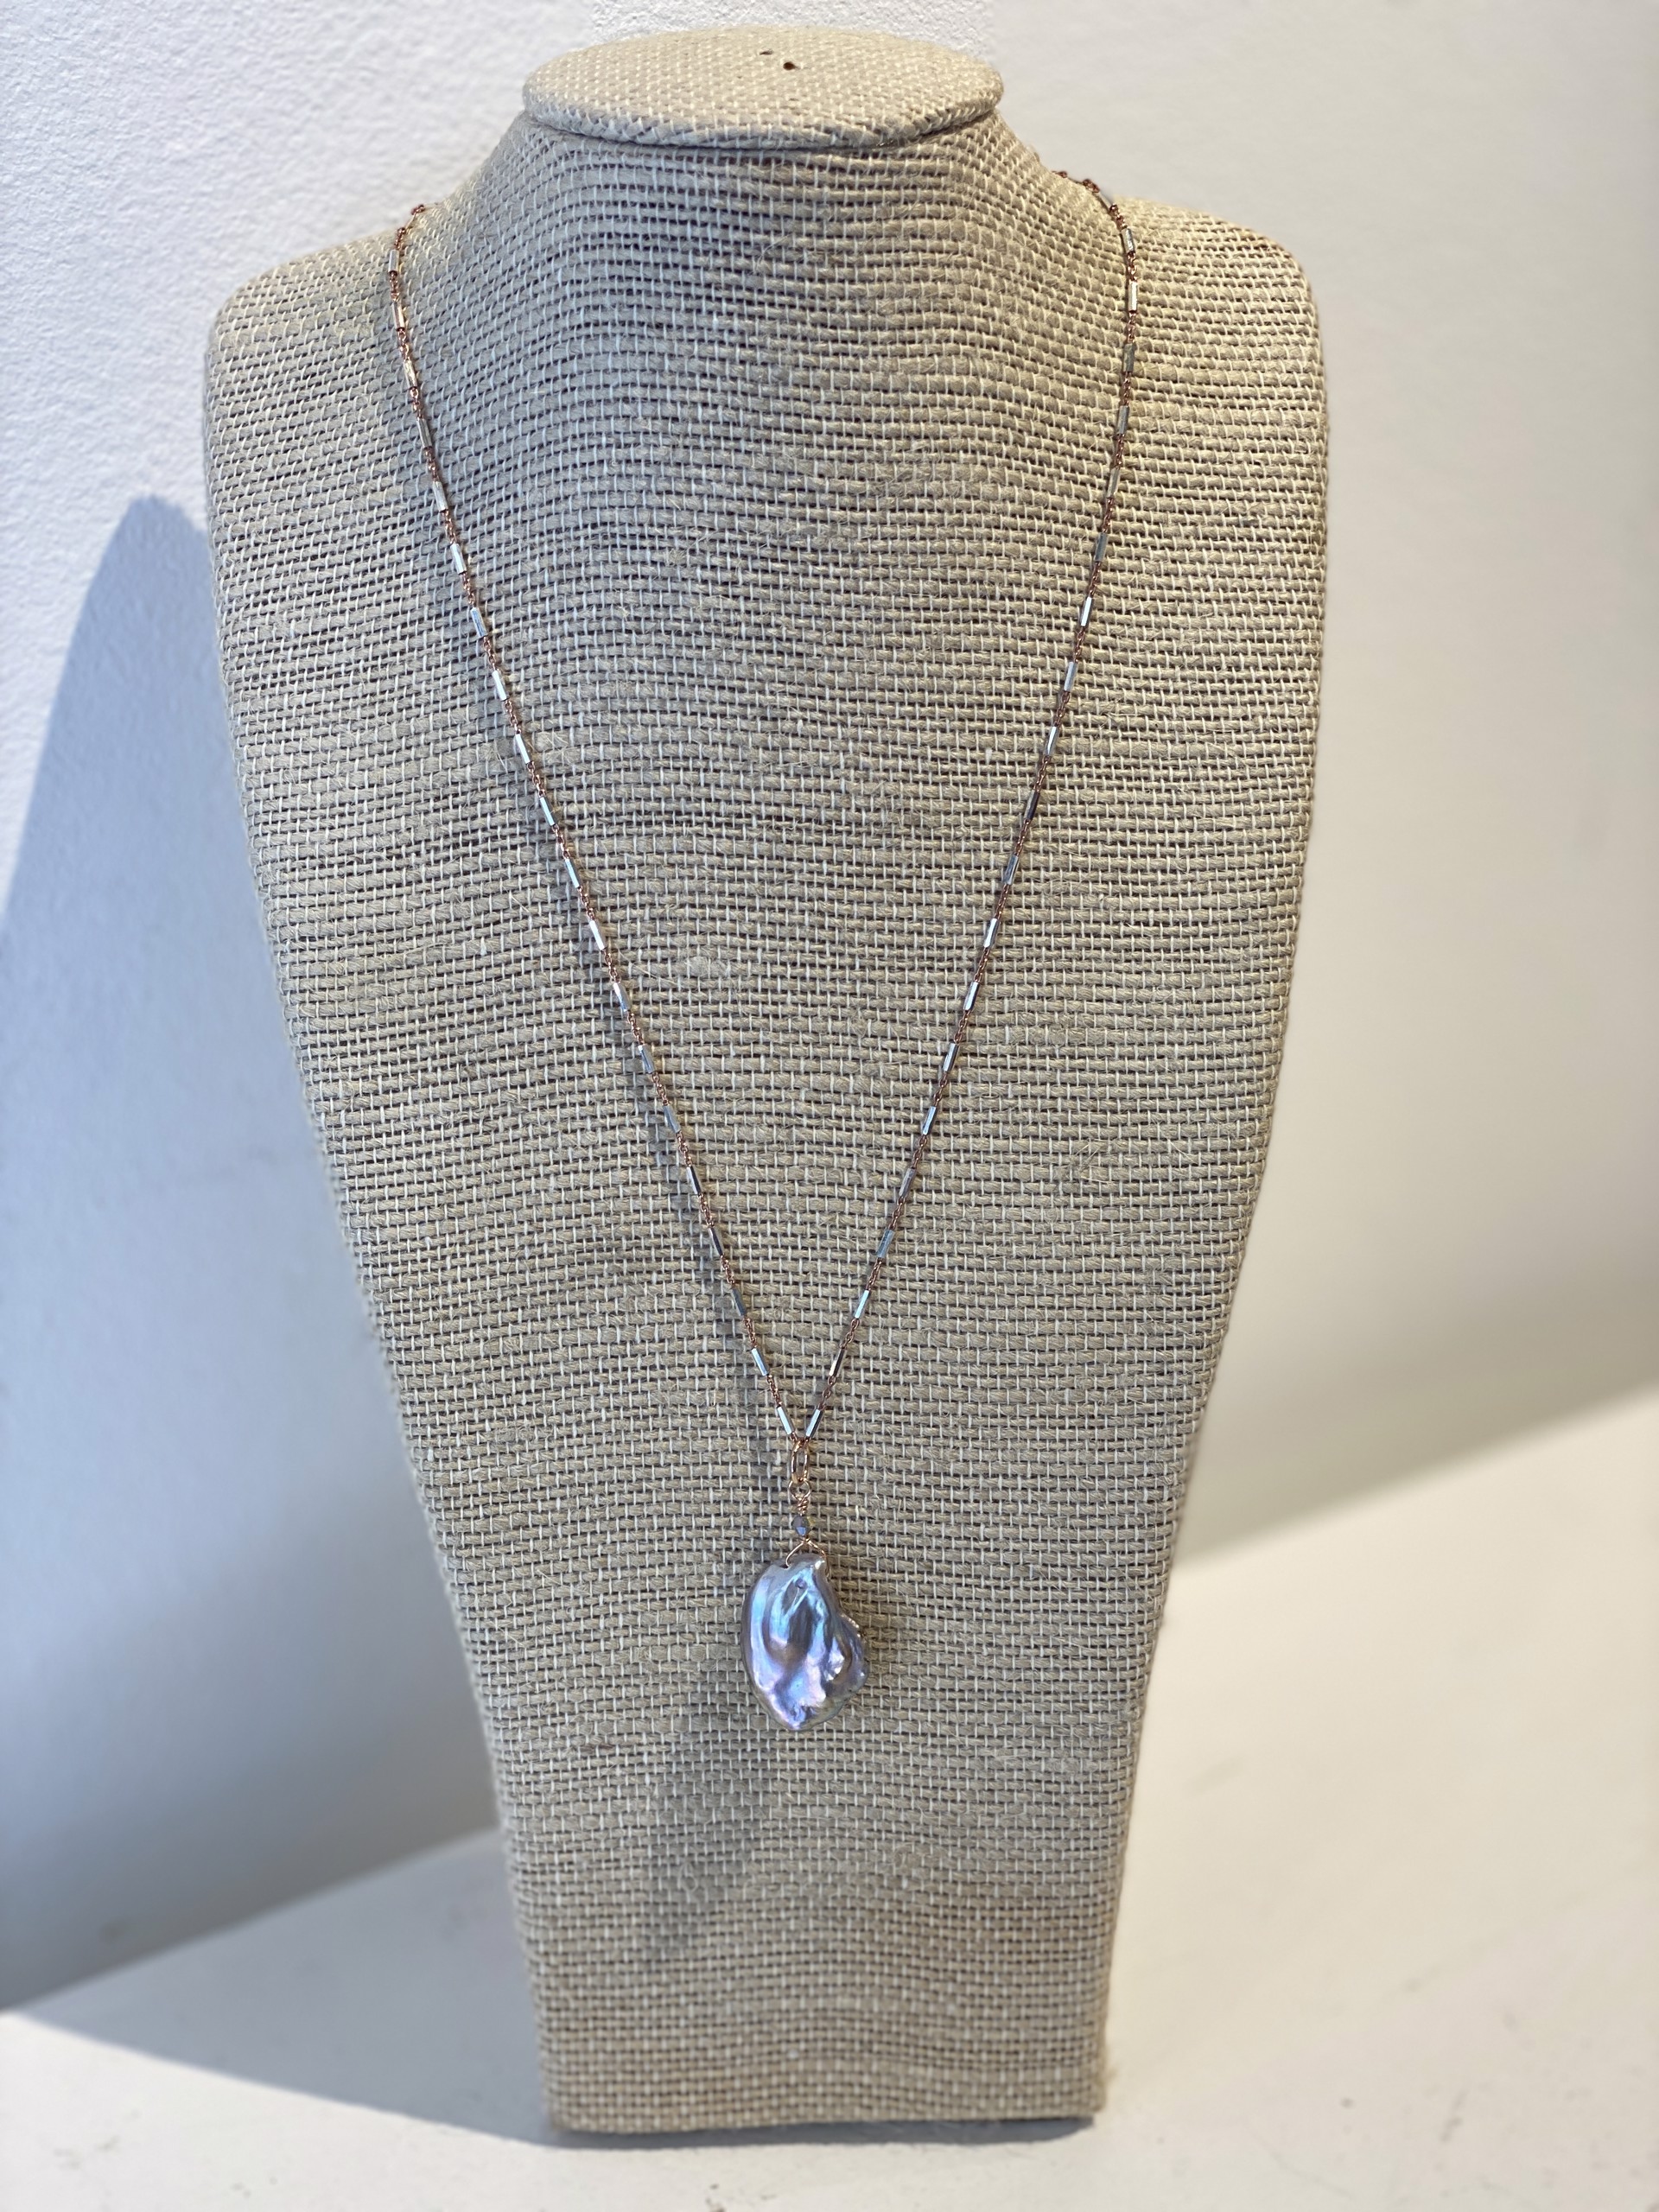 Keshi Pearl pendant on Rose Gold Vermeil and Swarovski crystal by Ann Marie Hodrick